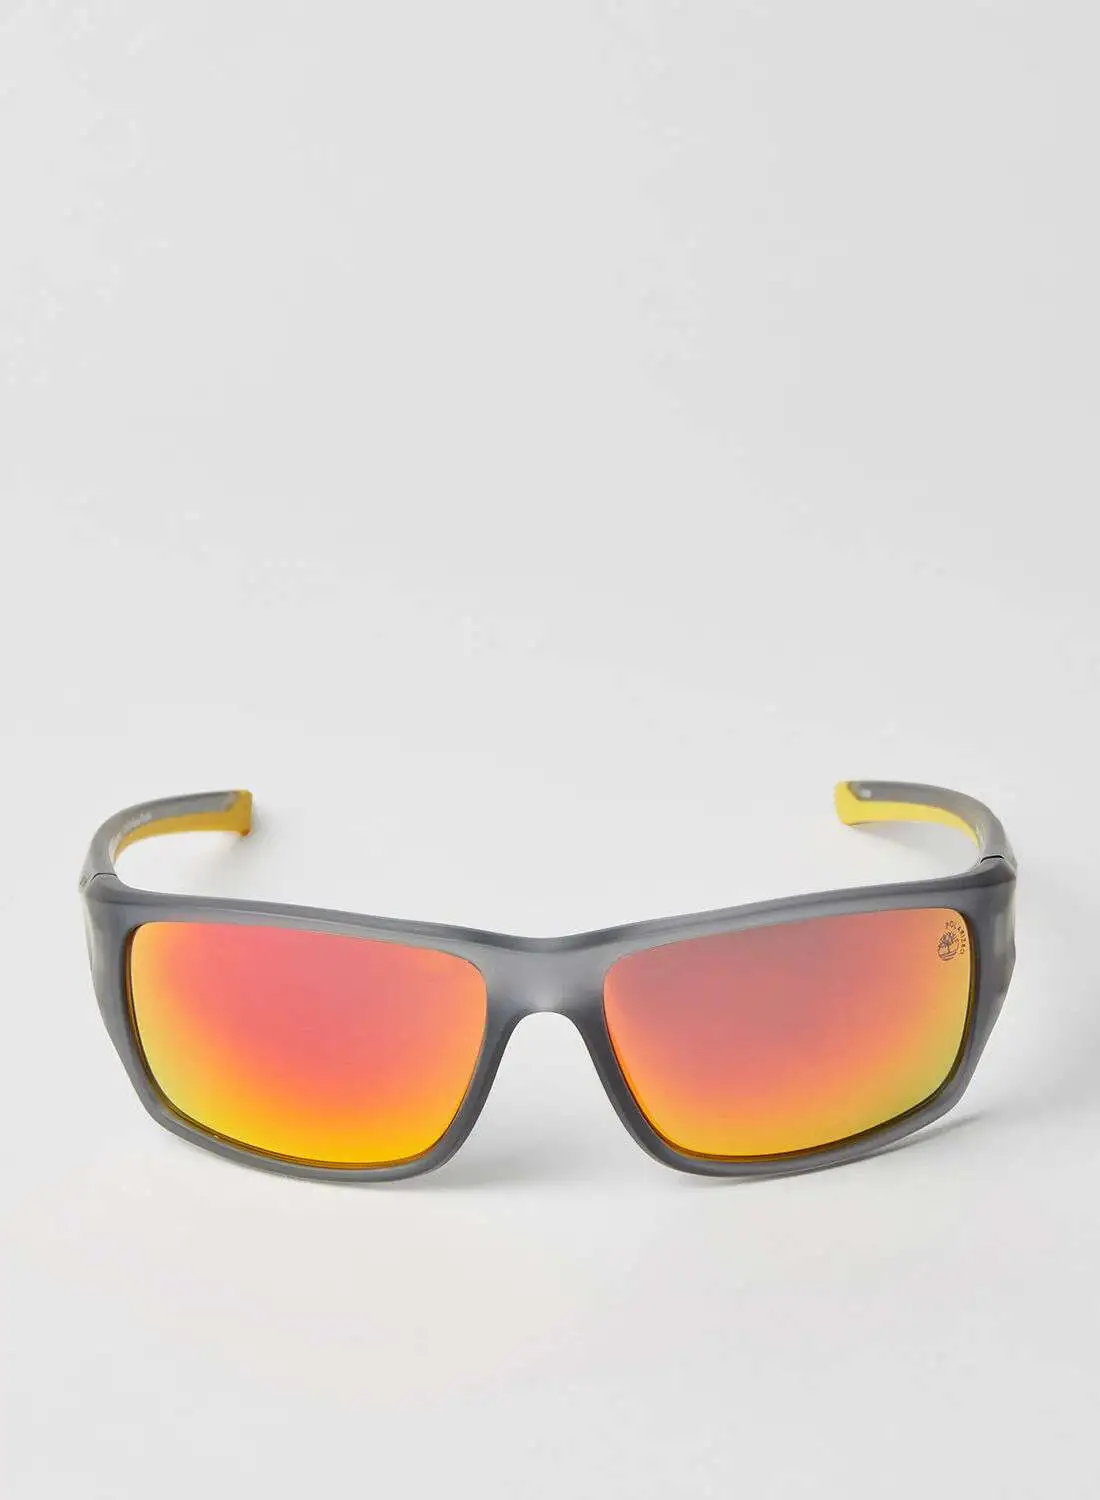 Timberland Men's UV Protective Sunglasses TB921720D61